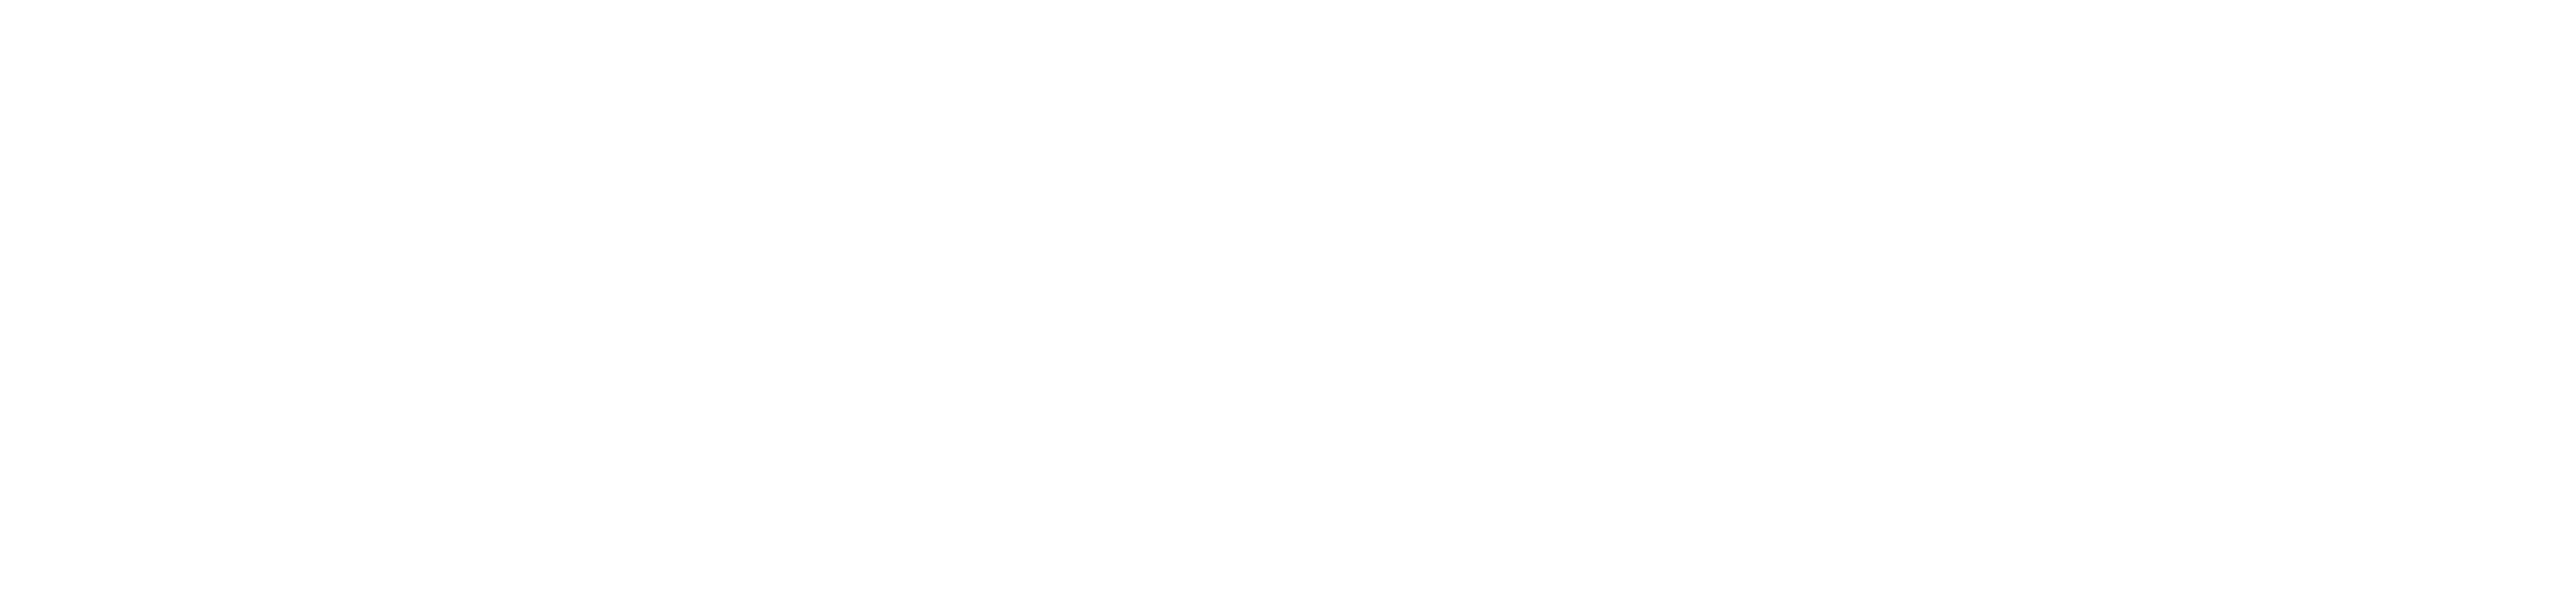 DIPG / DMG Collaborative